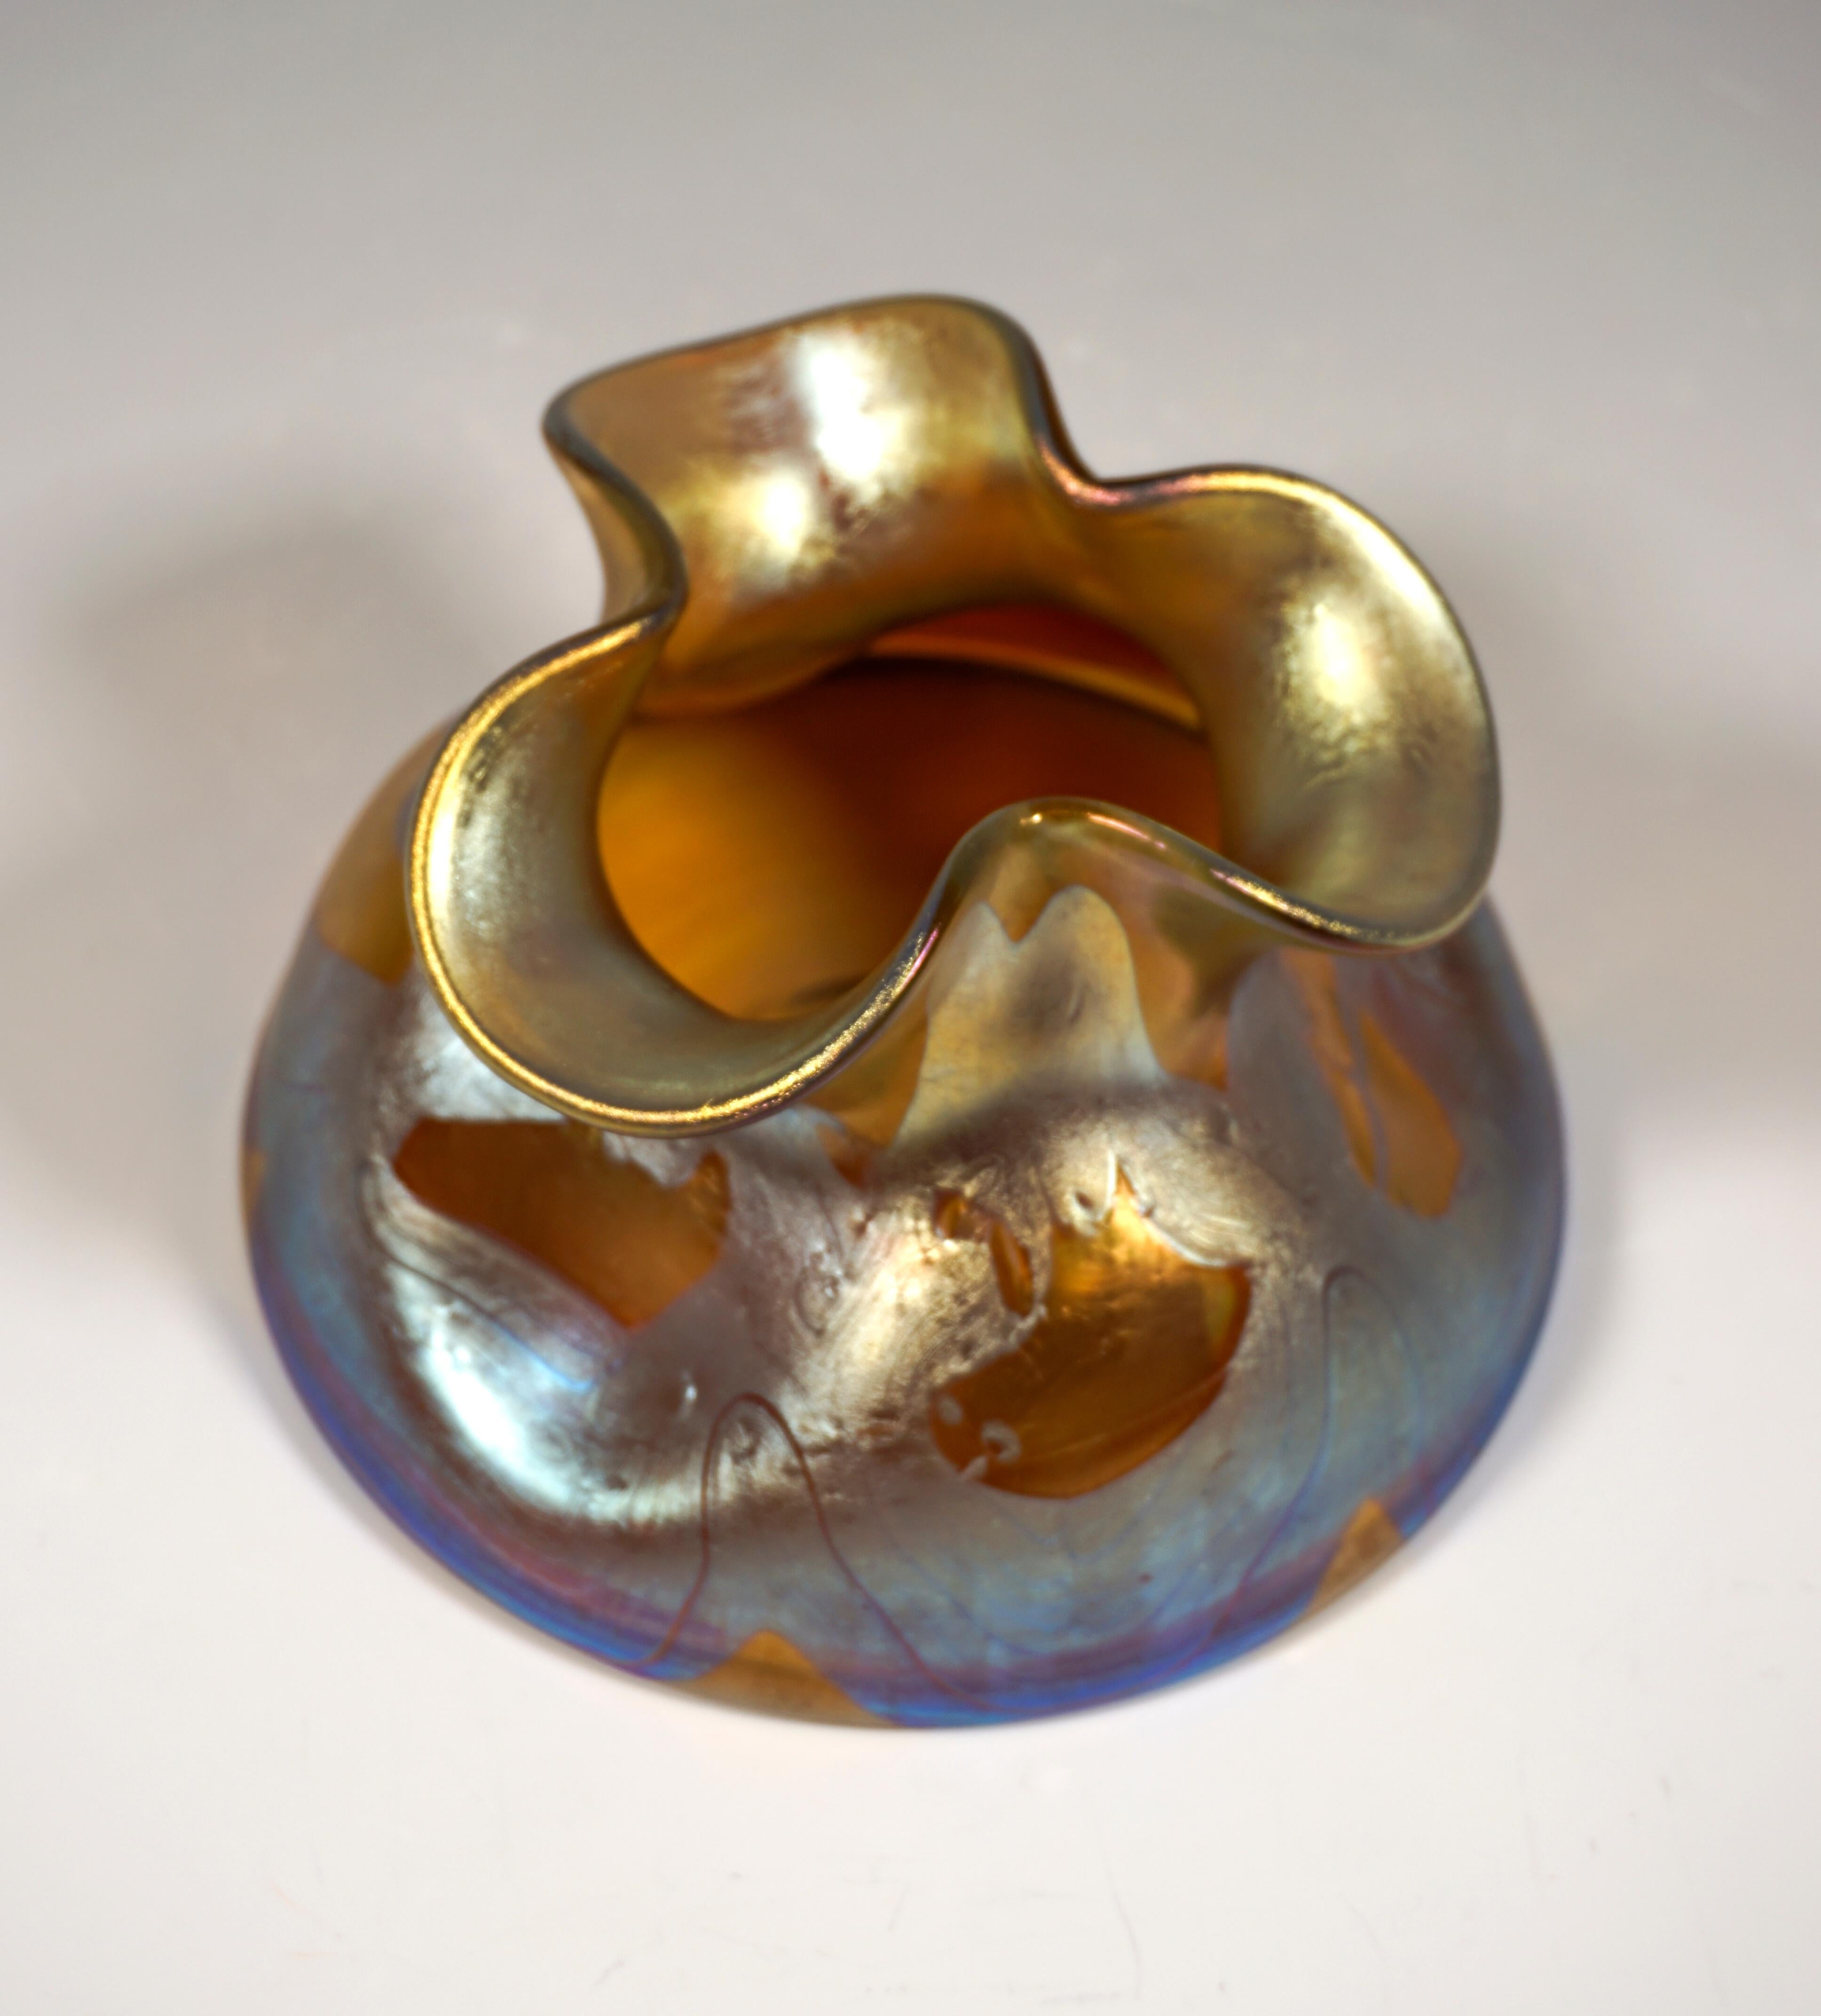 Hand-Crafted Loetz Art Nouveau Glass Vase Bronze Phenomenon Genre 29, Austria, circa 1900